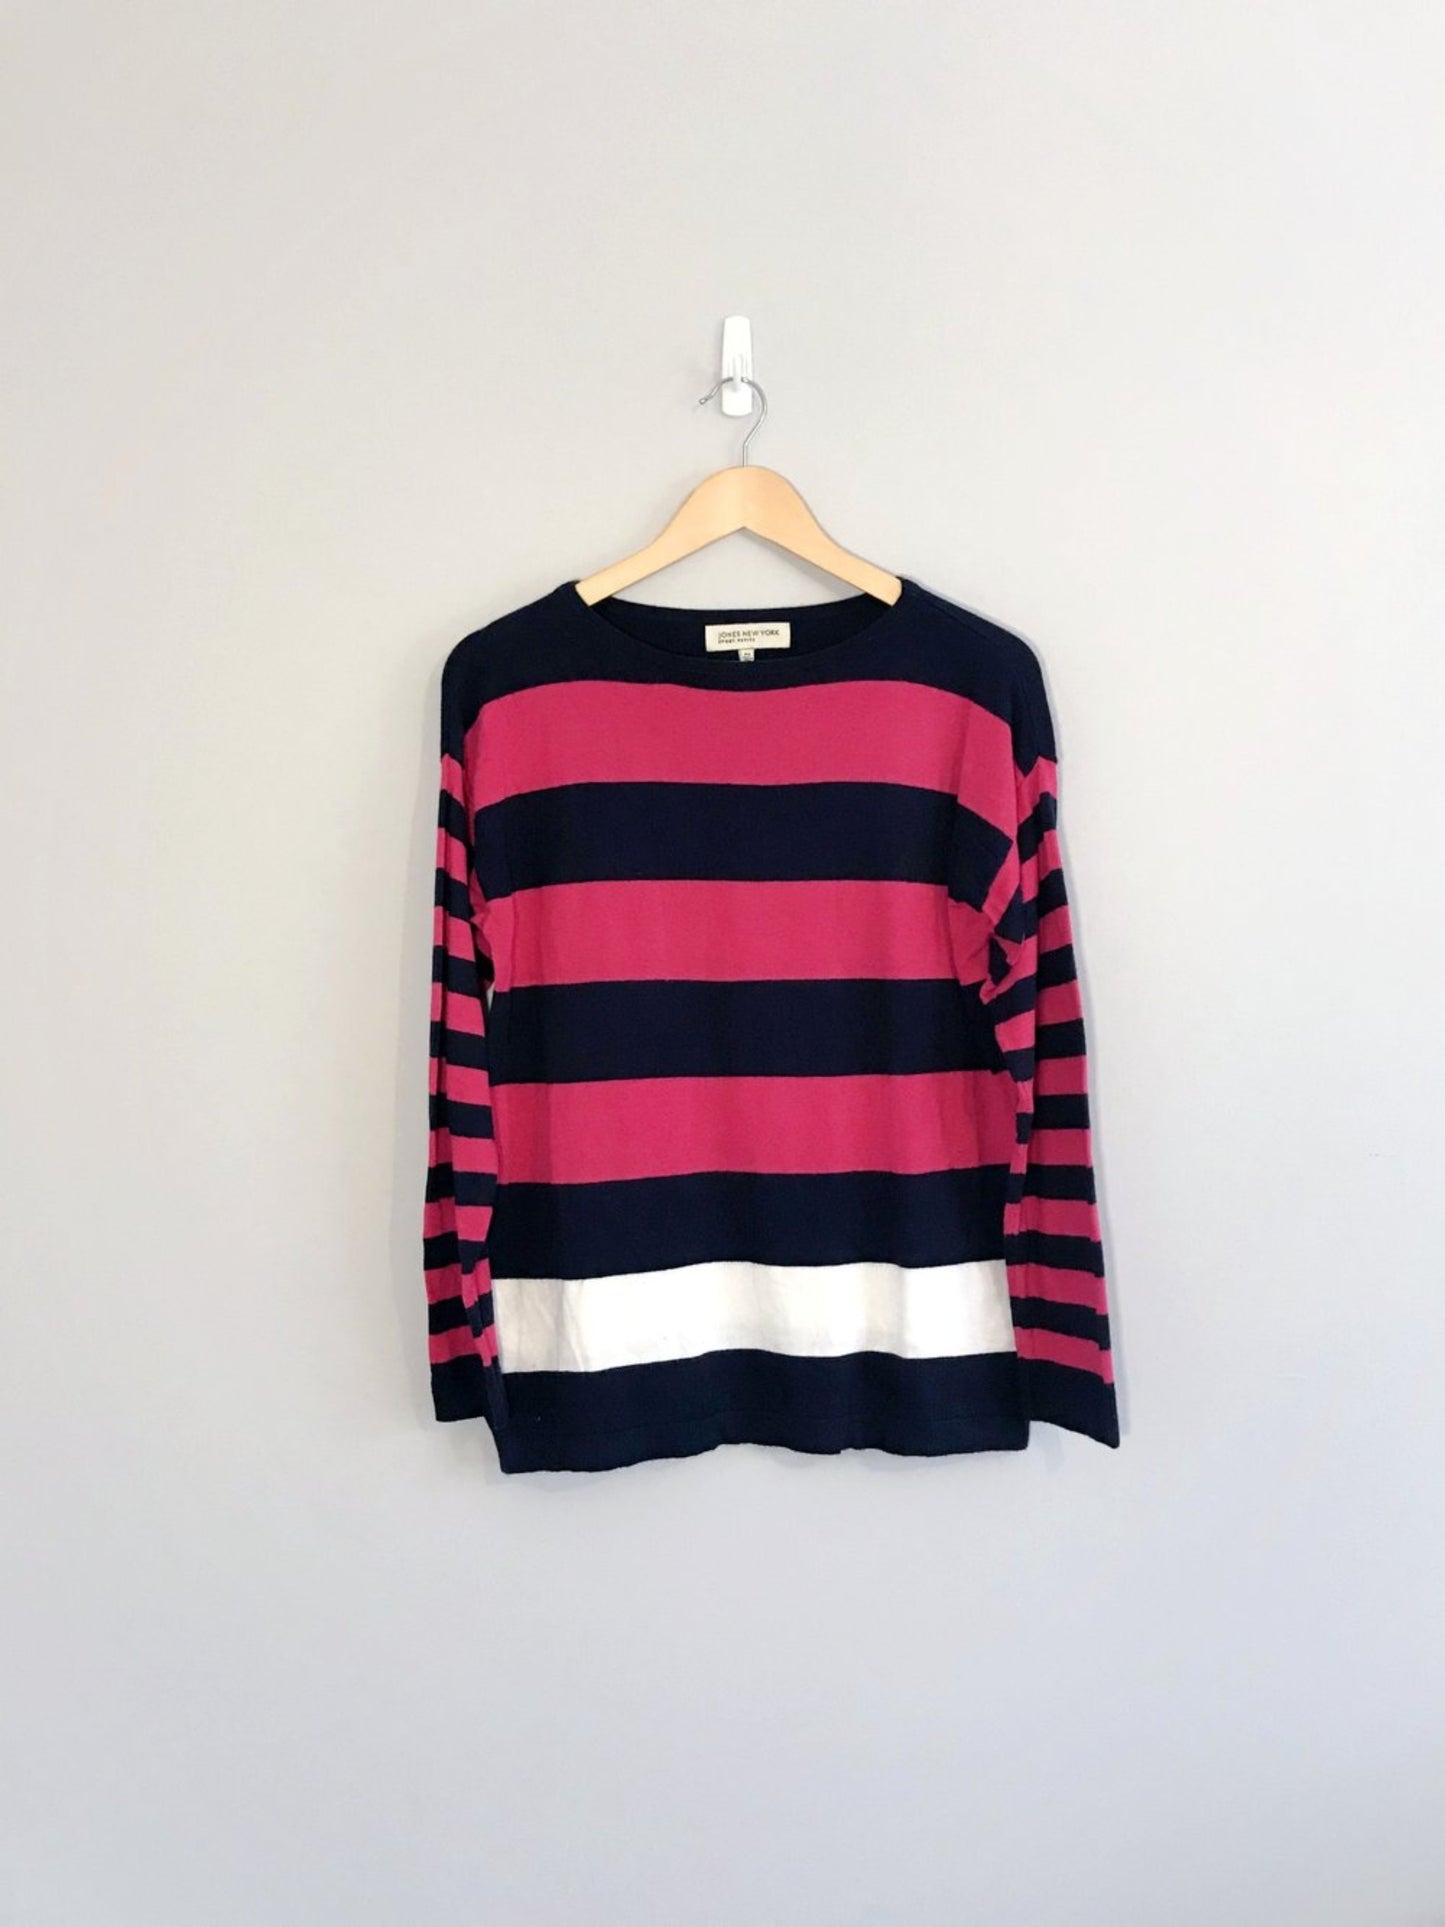 JNY Striped Sweater (Small)